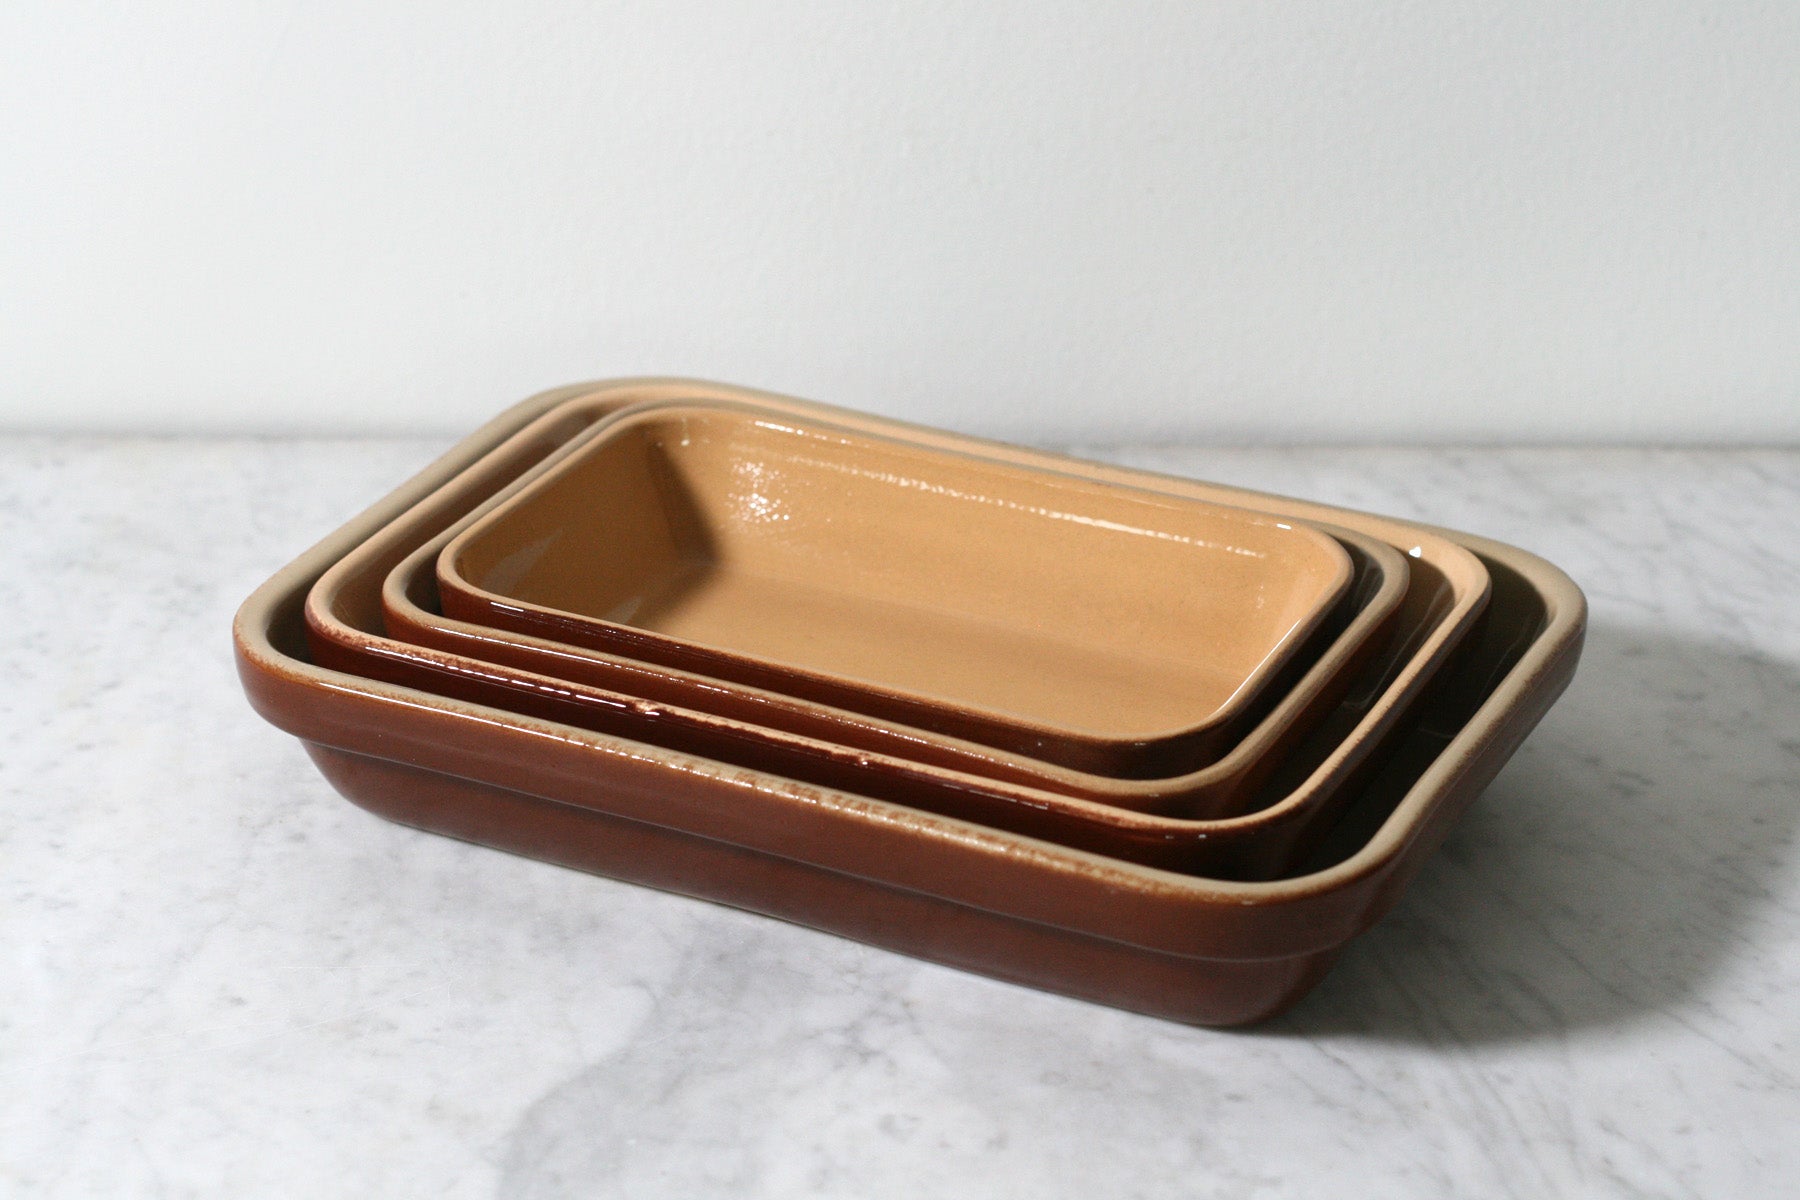 Manufacture de Digoin French Ceramic Mixing Bowls, 2 Colors